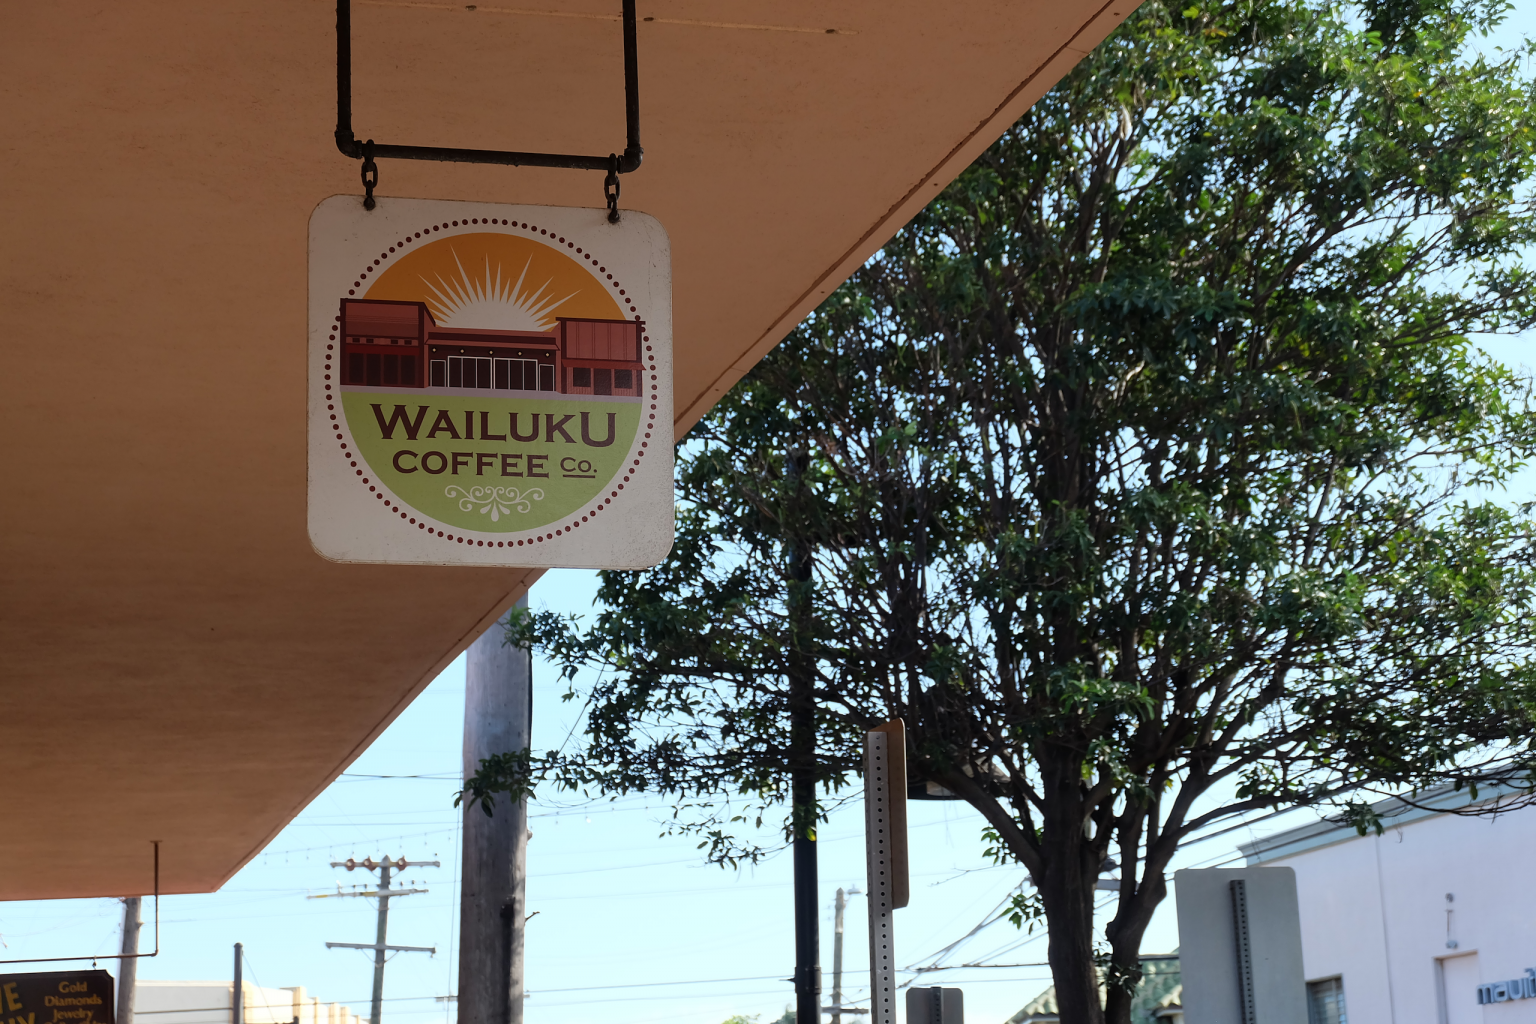 Wailuku Coffee